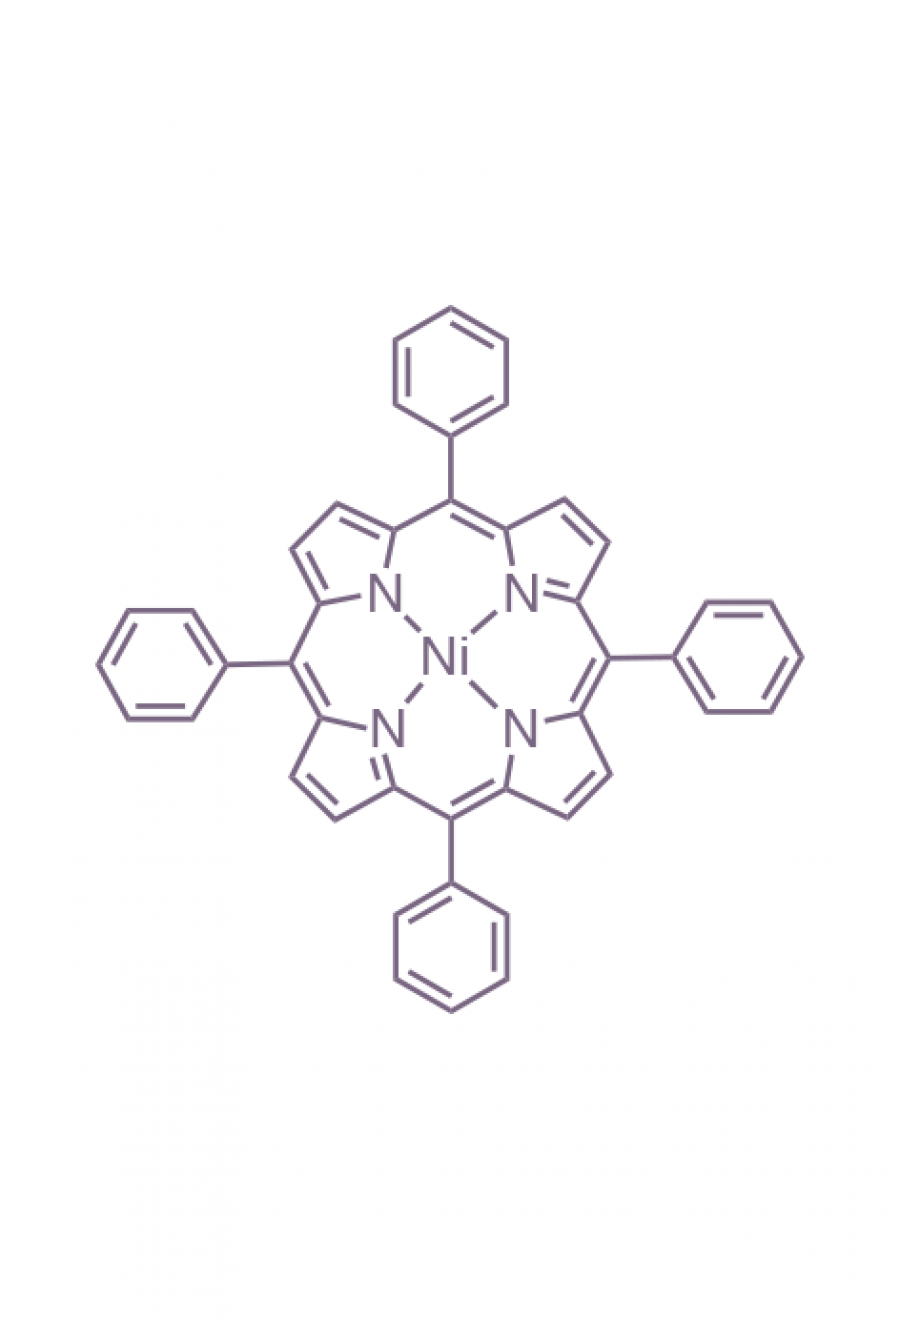 nickel(II) 5,10,15,20-(tetraphenyl)porphyrin  | Porphychem Expert porphyrin synthesis for research & industry